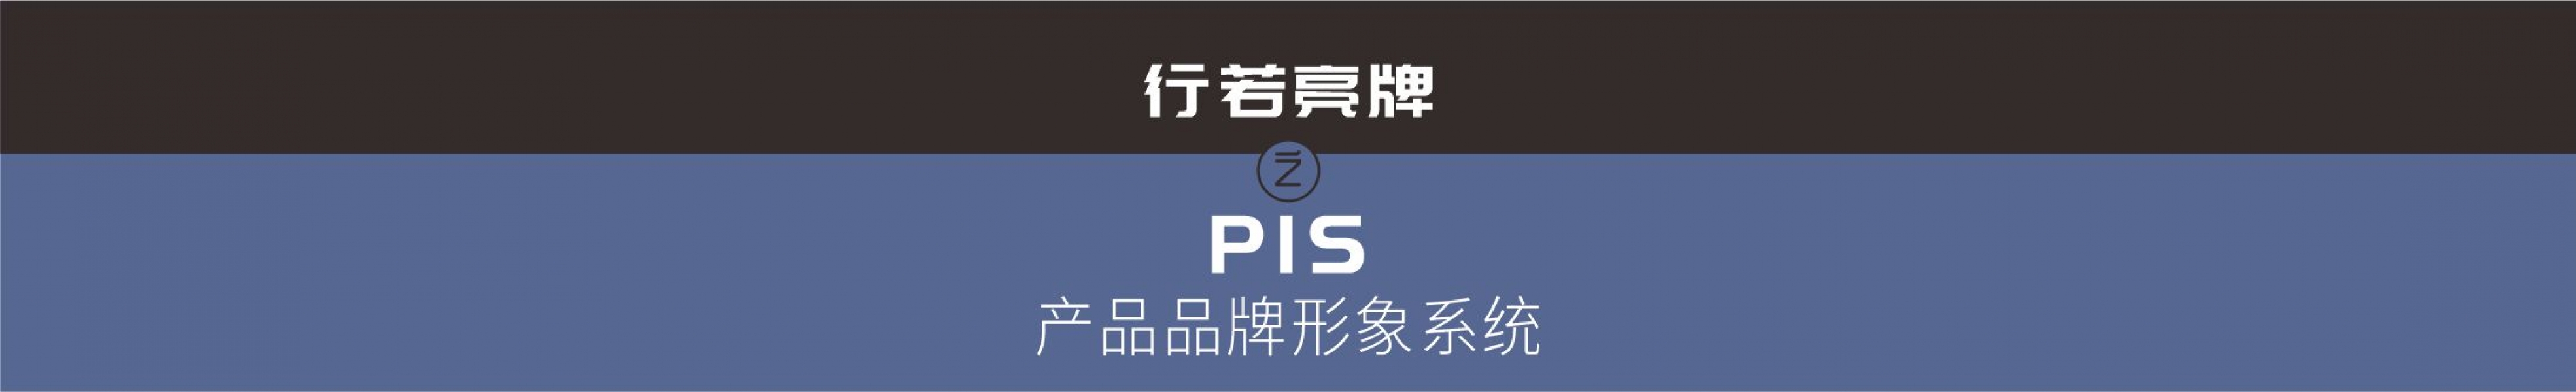 PIS--产品品牌形象系统